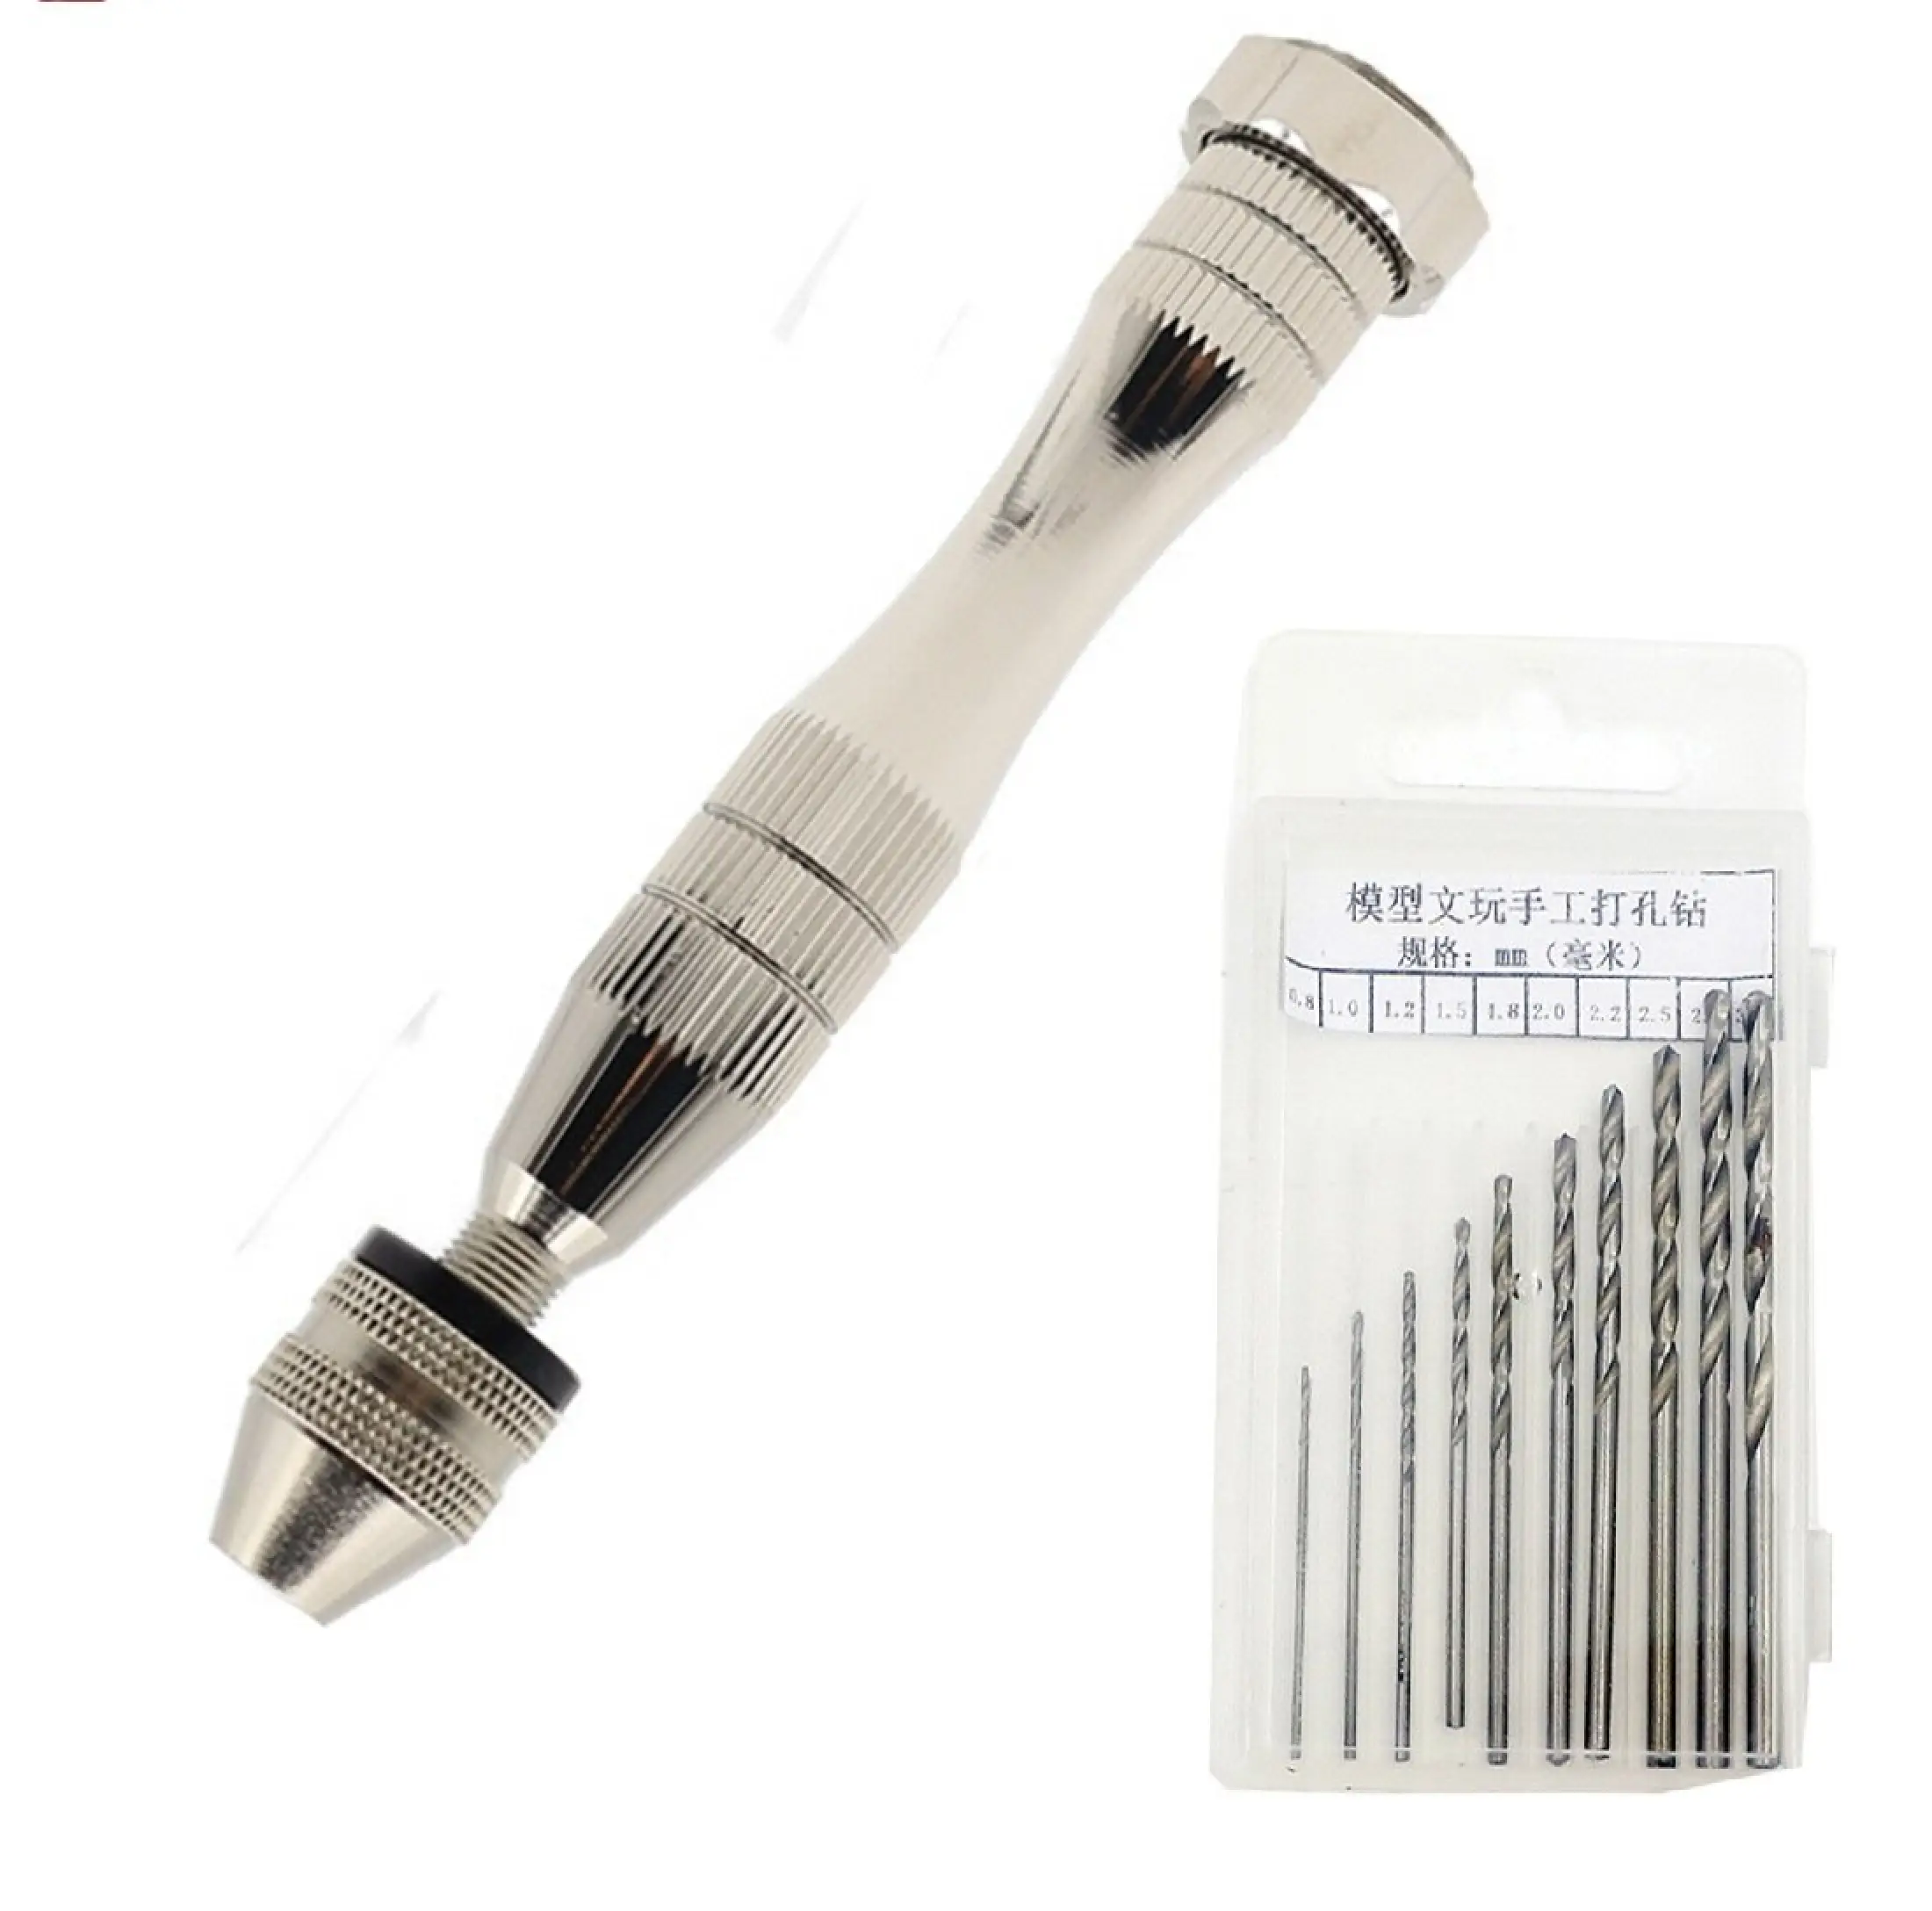 High Mini Hand Drill With Keyless Hole Drilling Manual Jewel 0.8-3mm Spiral